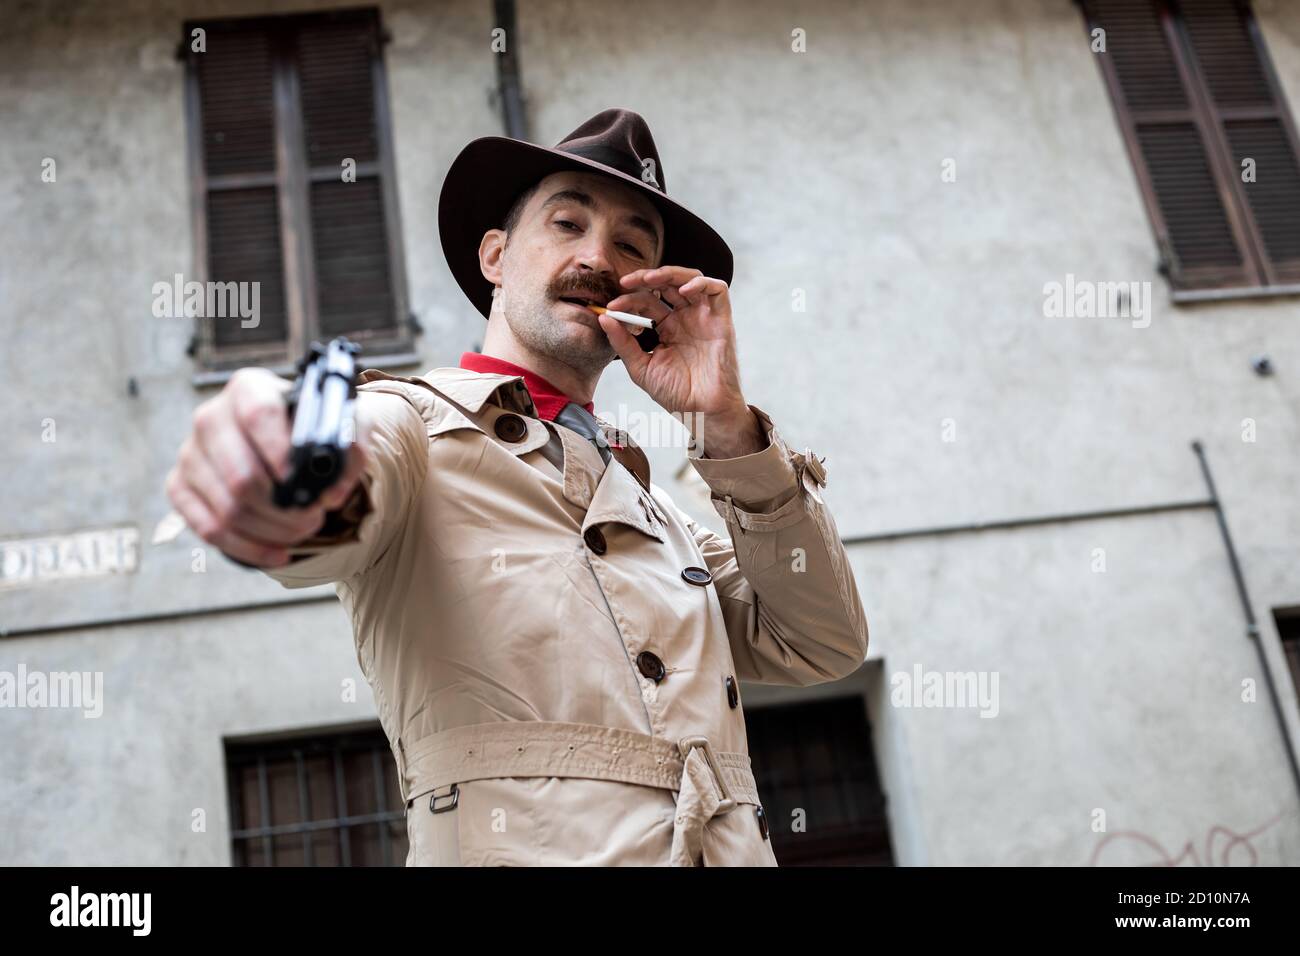 Hitman pointing the gun to the camera, execution concept Stock Photo